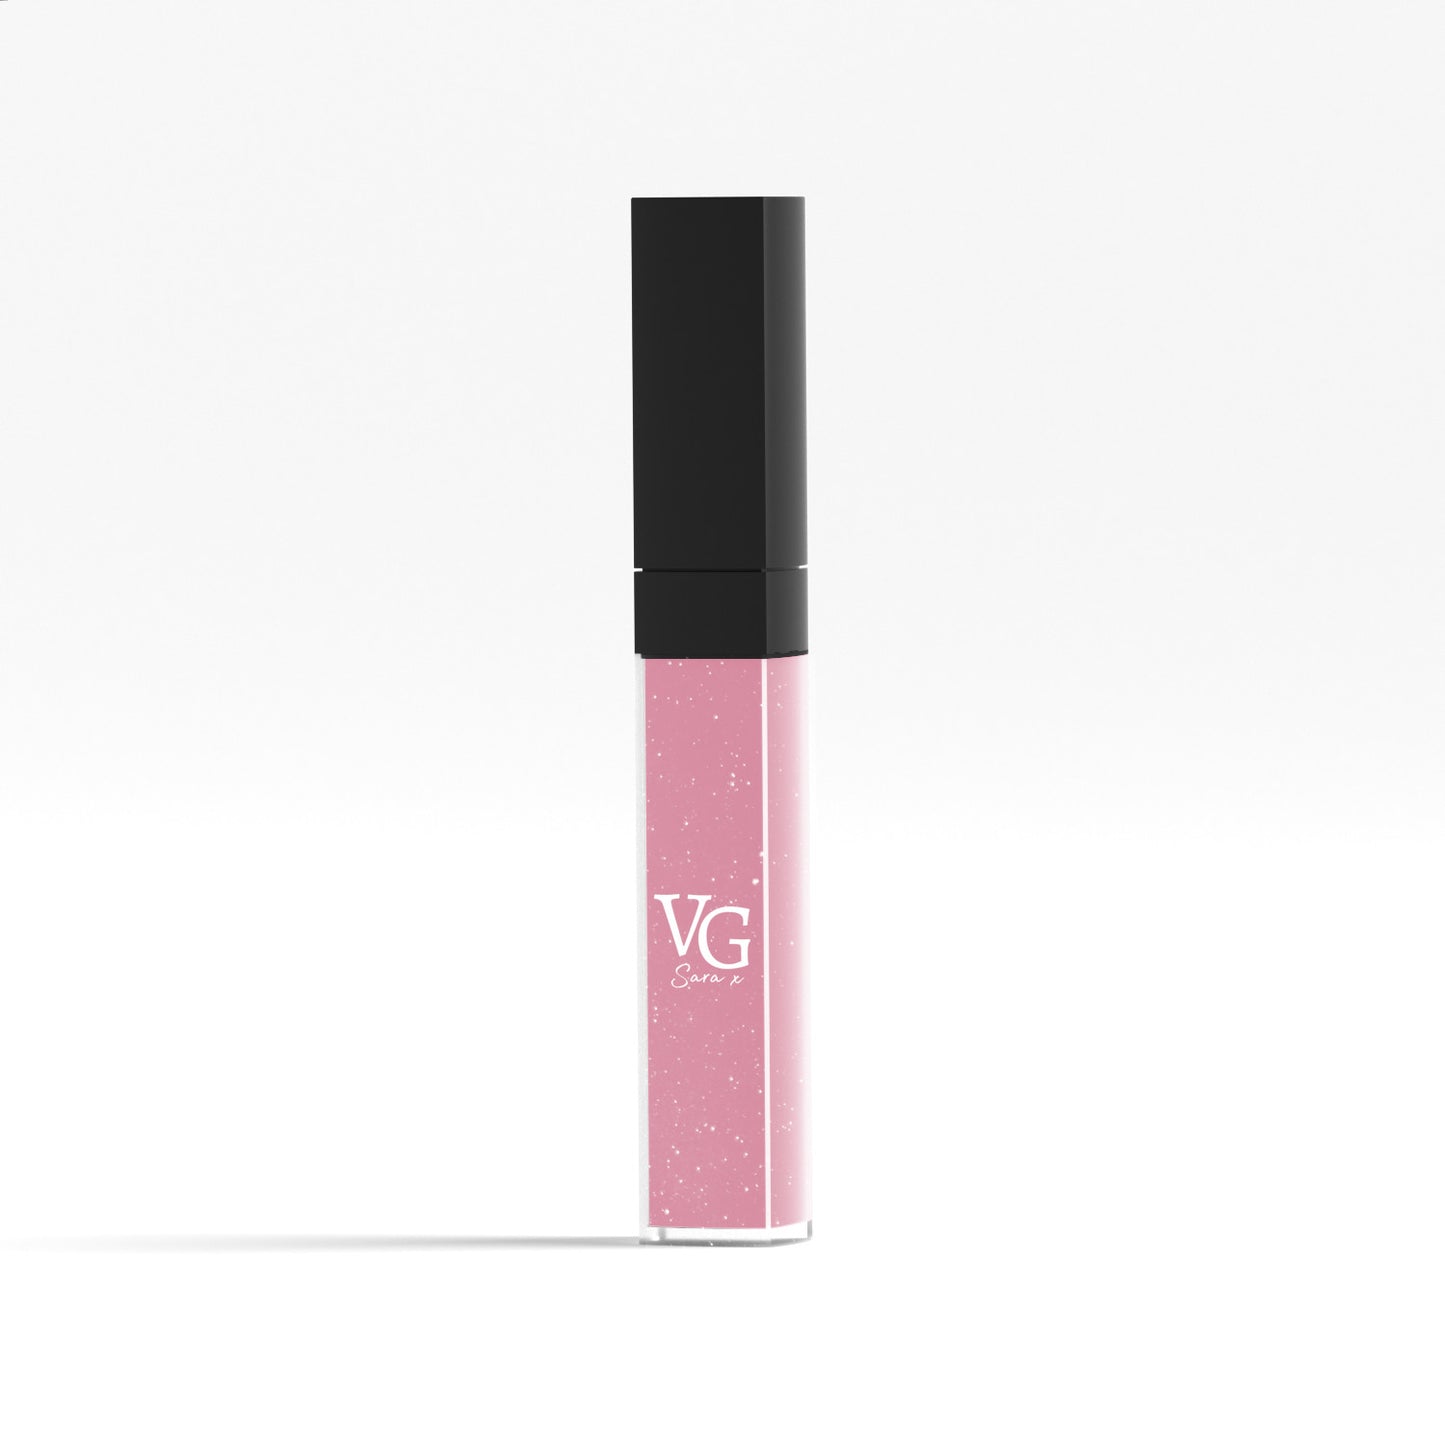 Close-up of pink VG branded vegan liquid lipstick